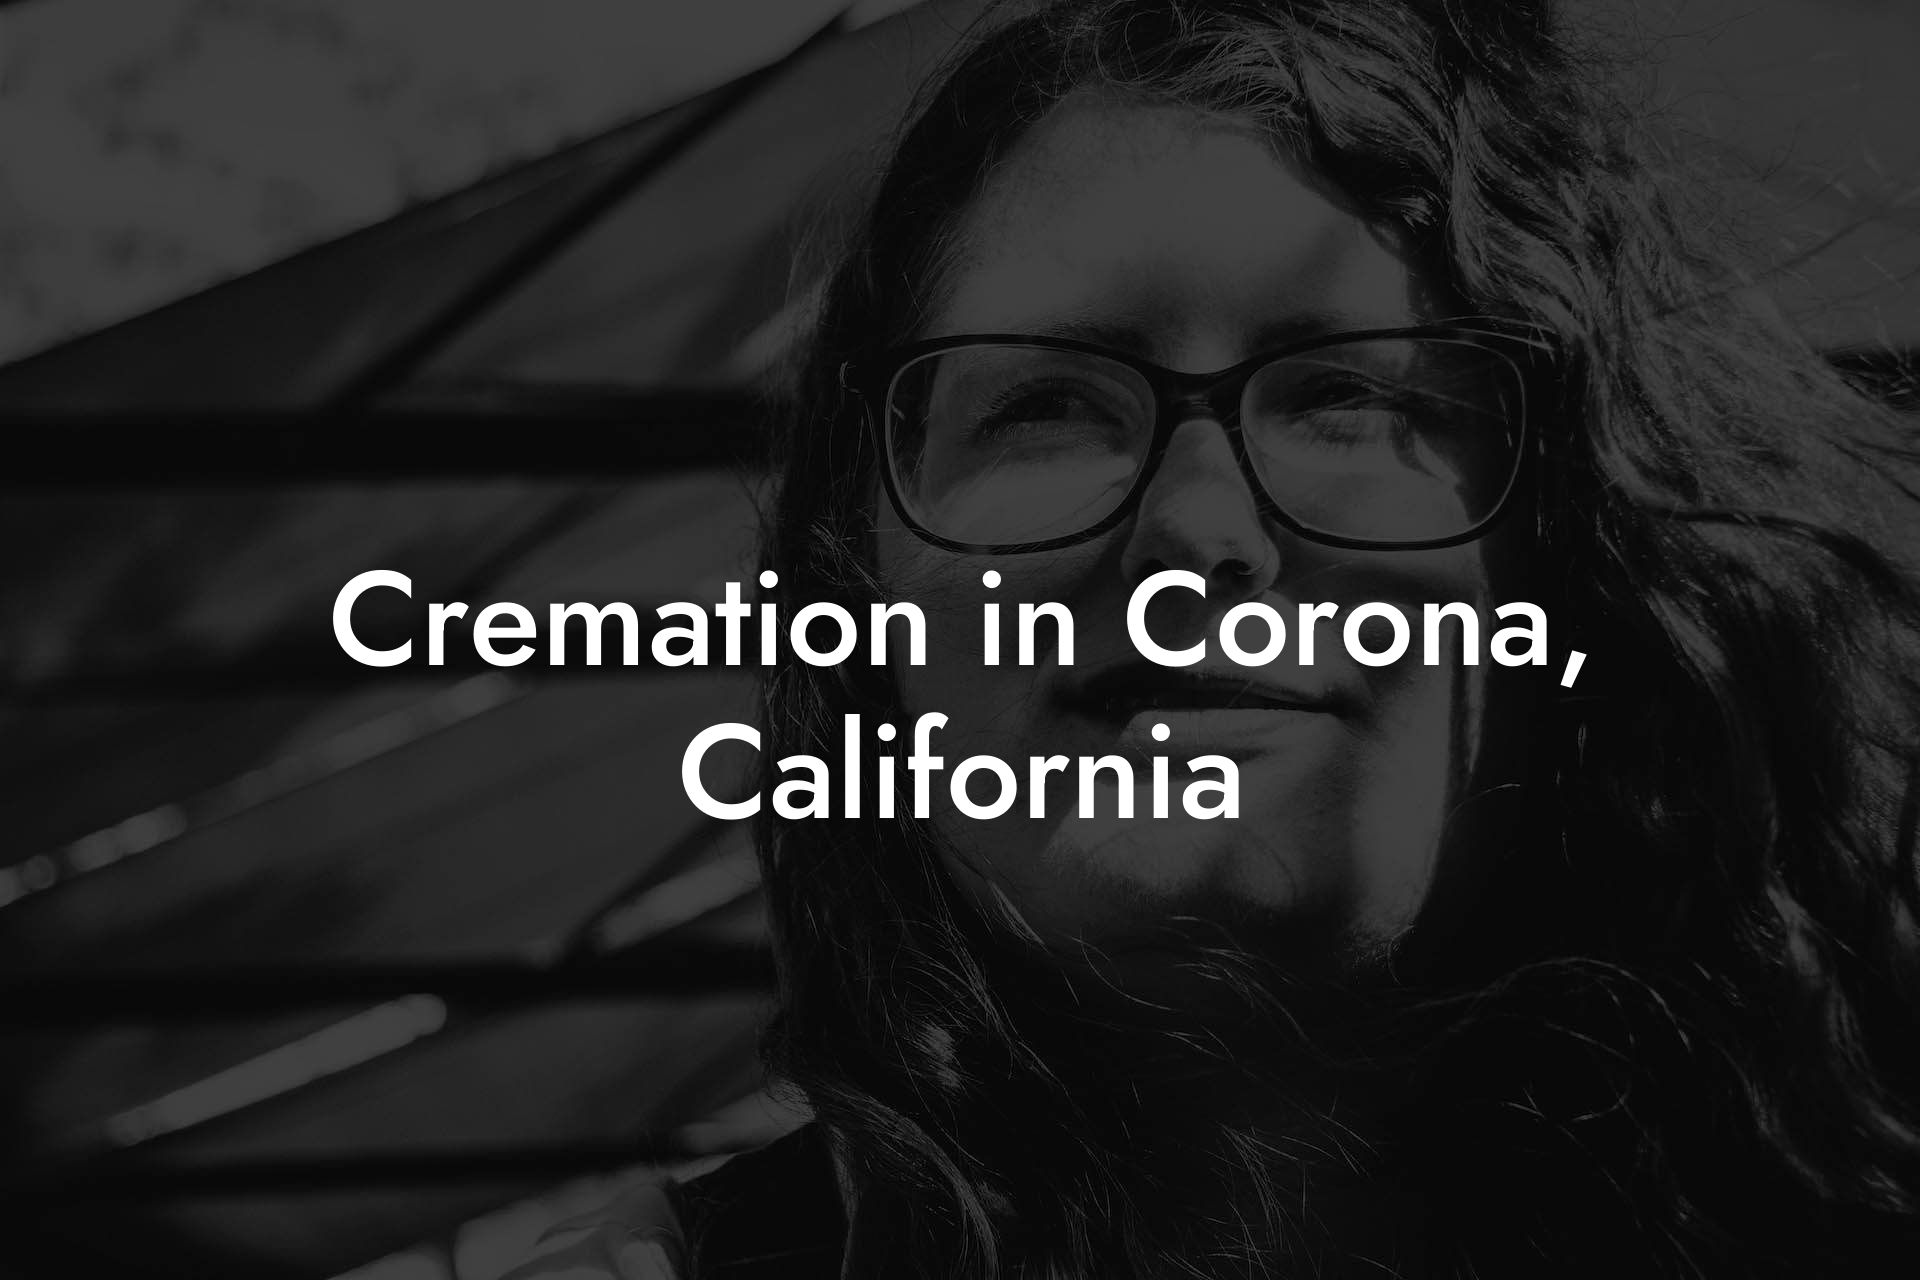 Cremation in Corona, California